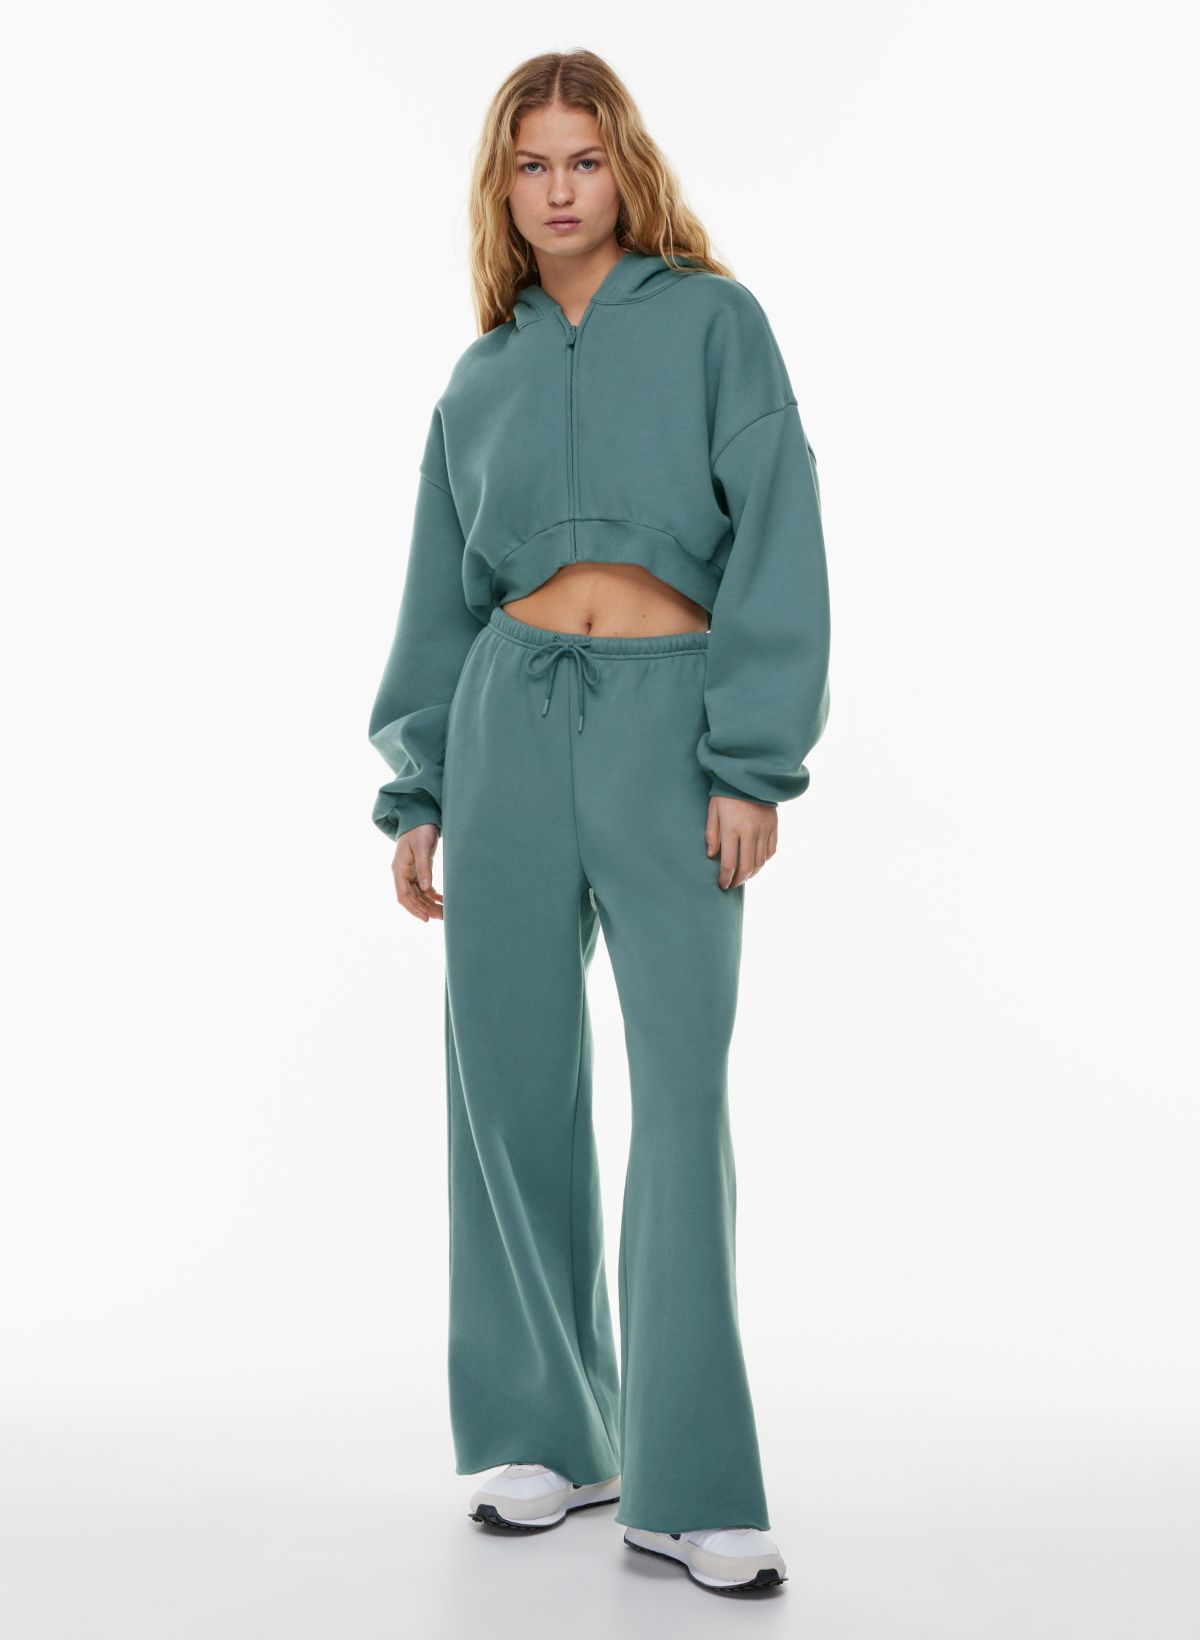 Women's Soft & Cozy Sweater Knit Lounge Pants Wide Leg Pajama PJ's